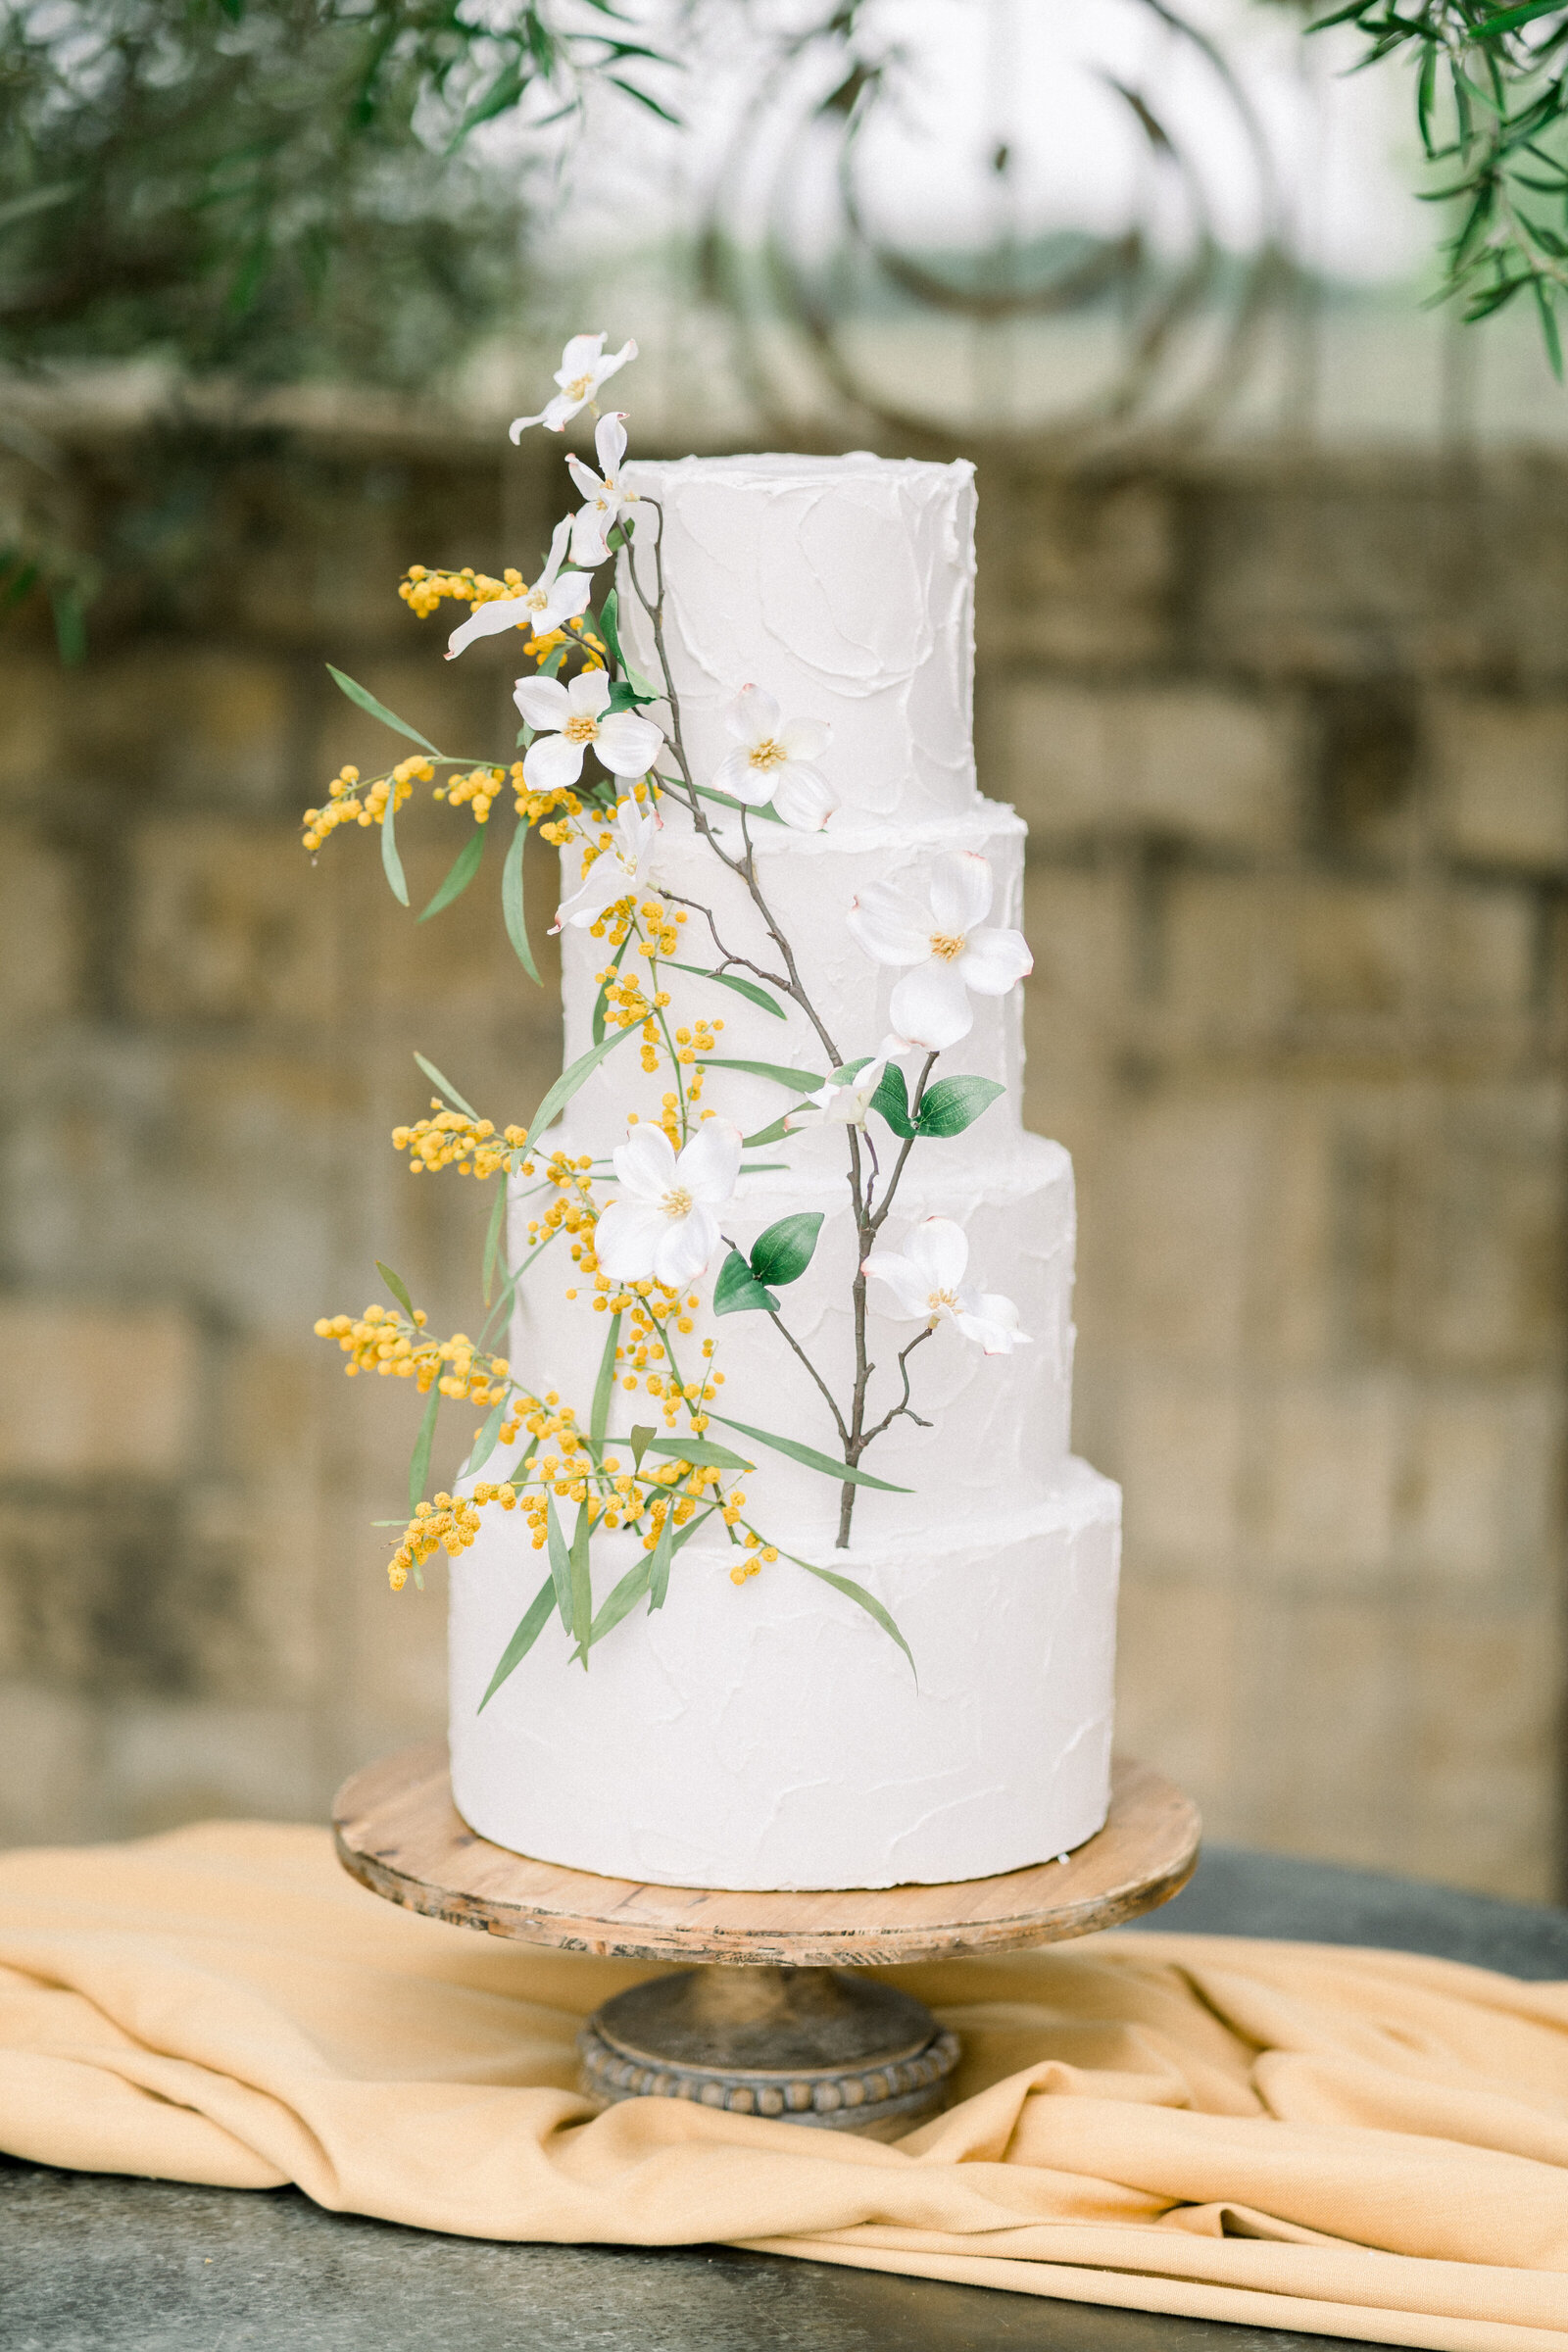 Yellow dogwood flower wedding cake at Sunstone Winery wedding in Santa Ynez, CA